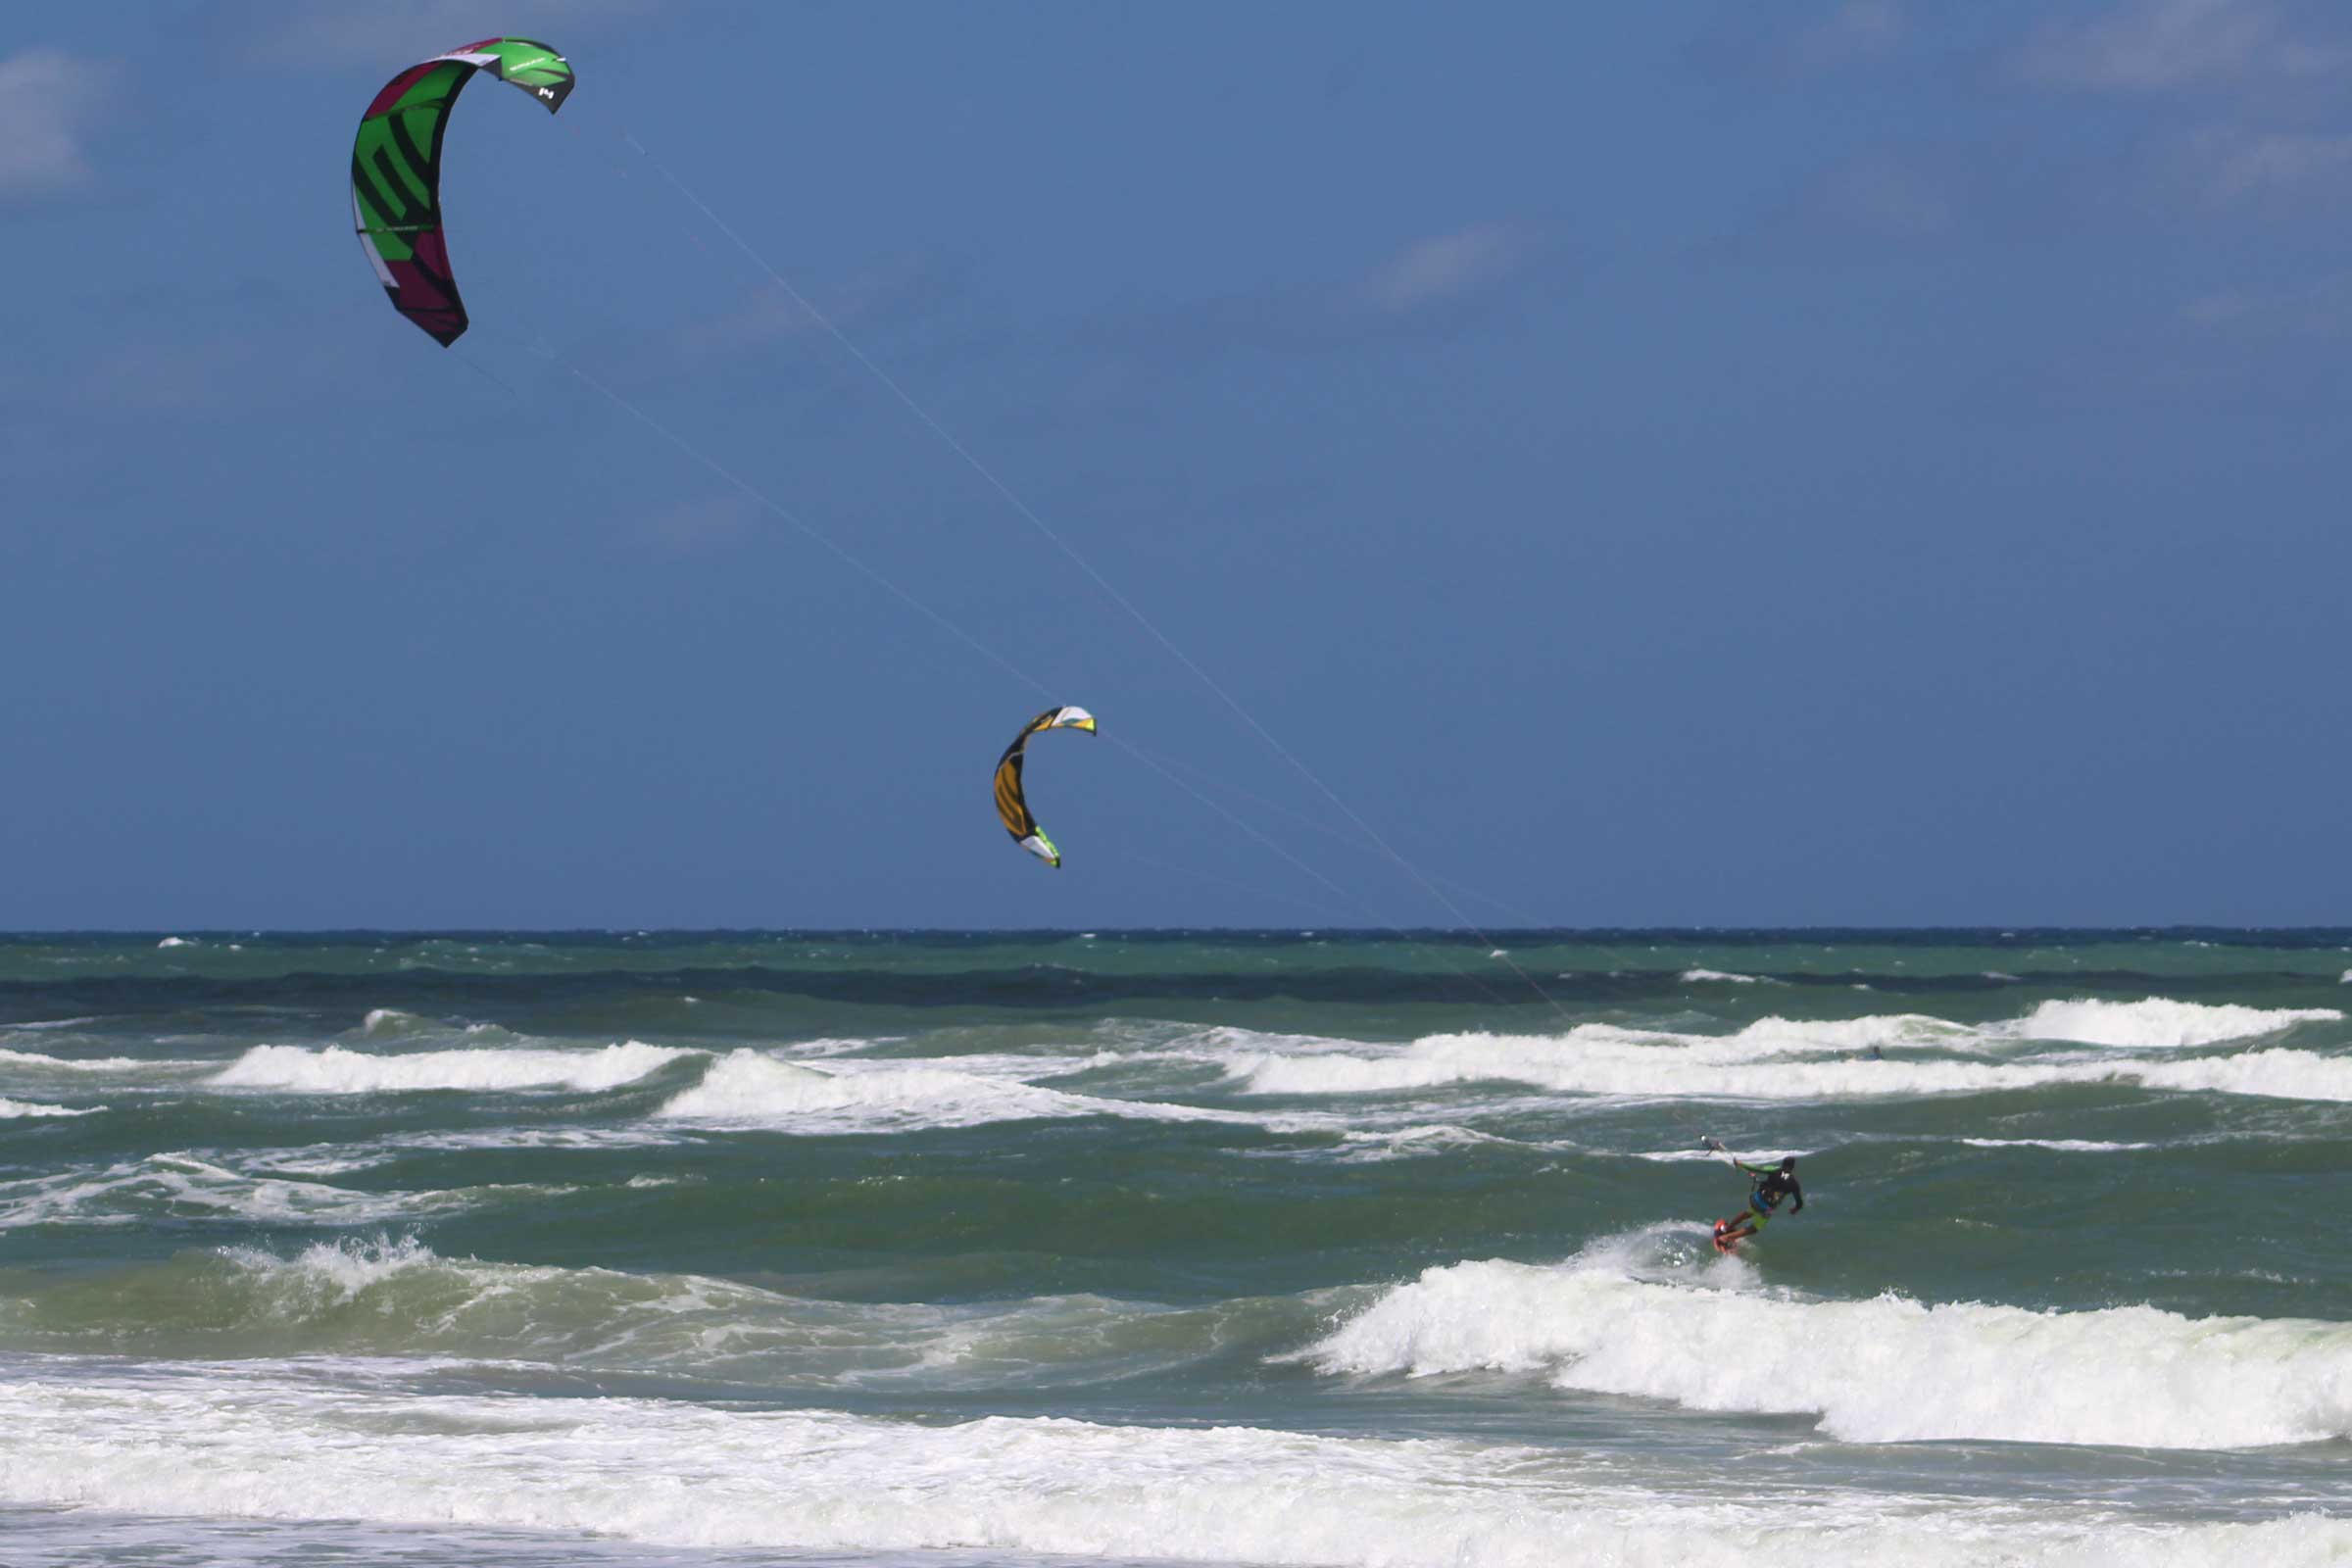 Dimitri Maramenides shredding it today in his Epic Kites Jupiter, FL 1